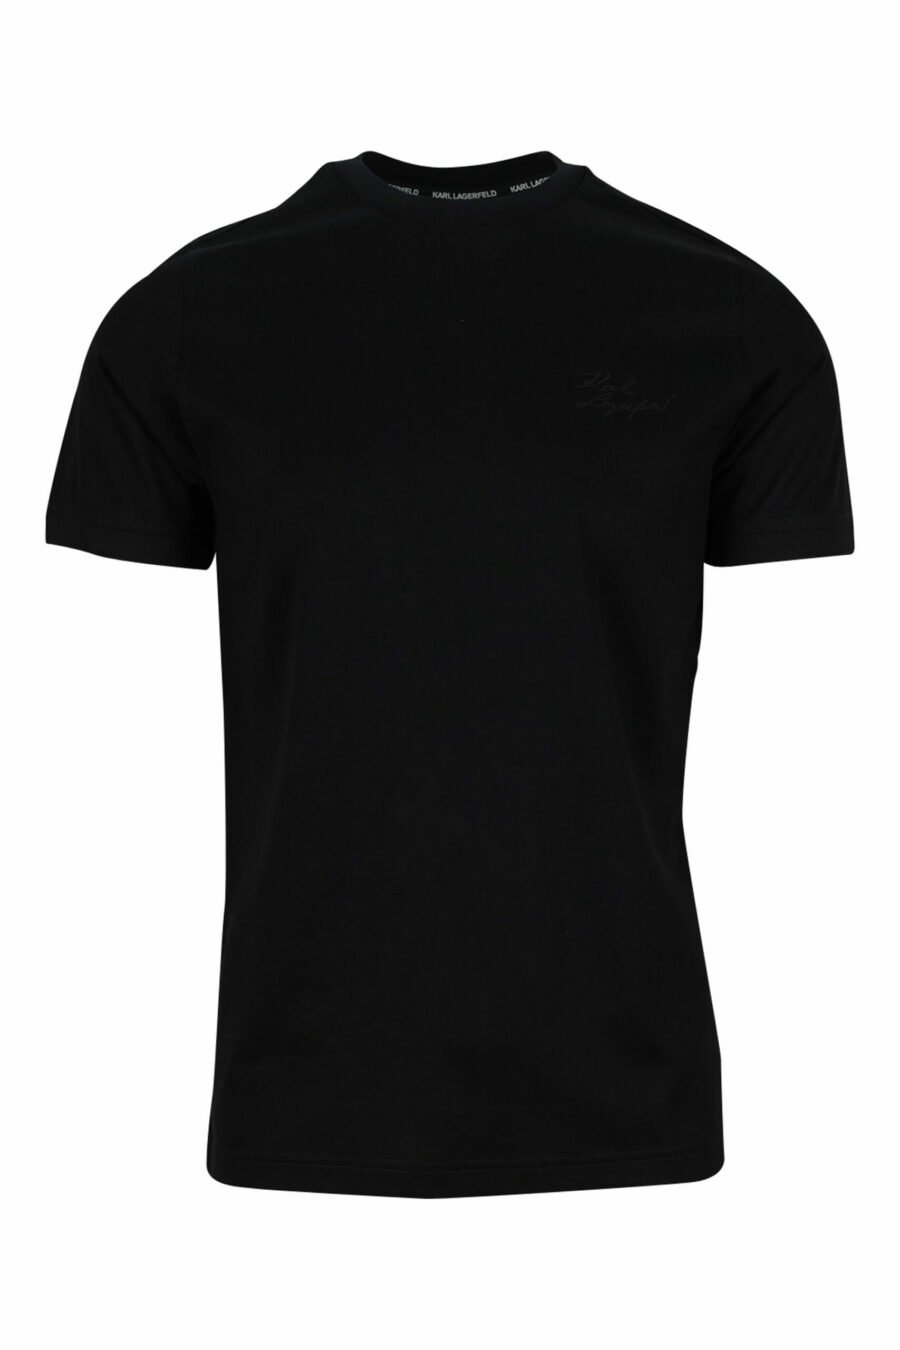 Camiseta negra con minilogo negro - 4062226400473 scaled